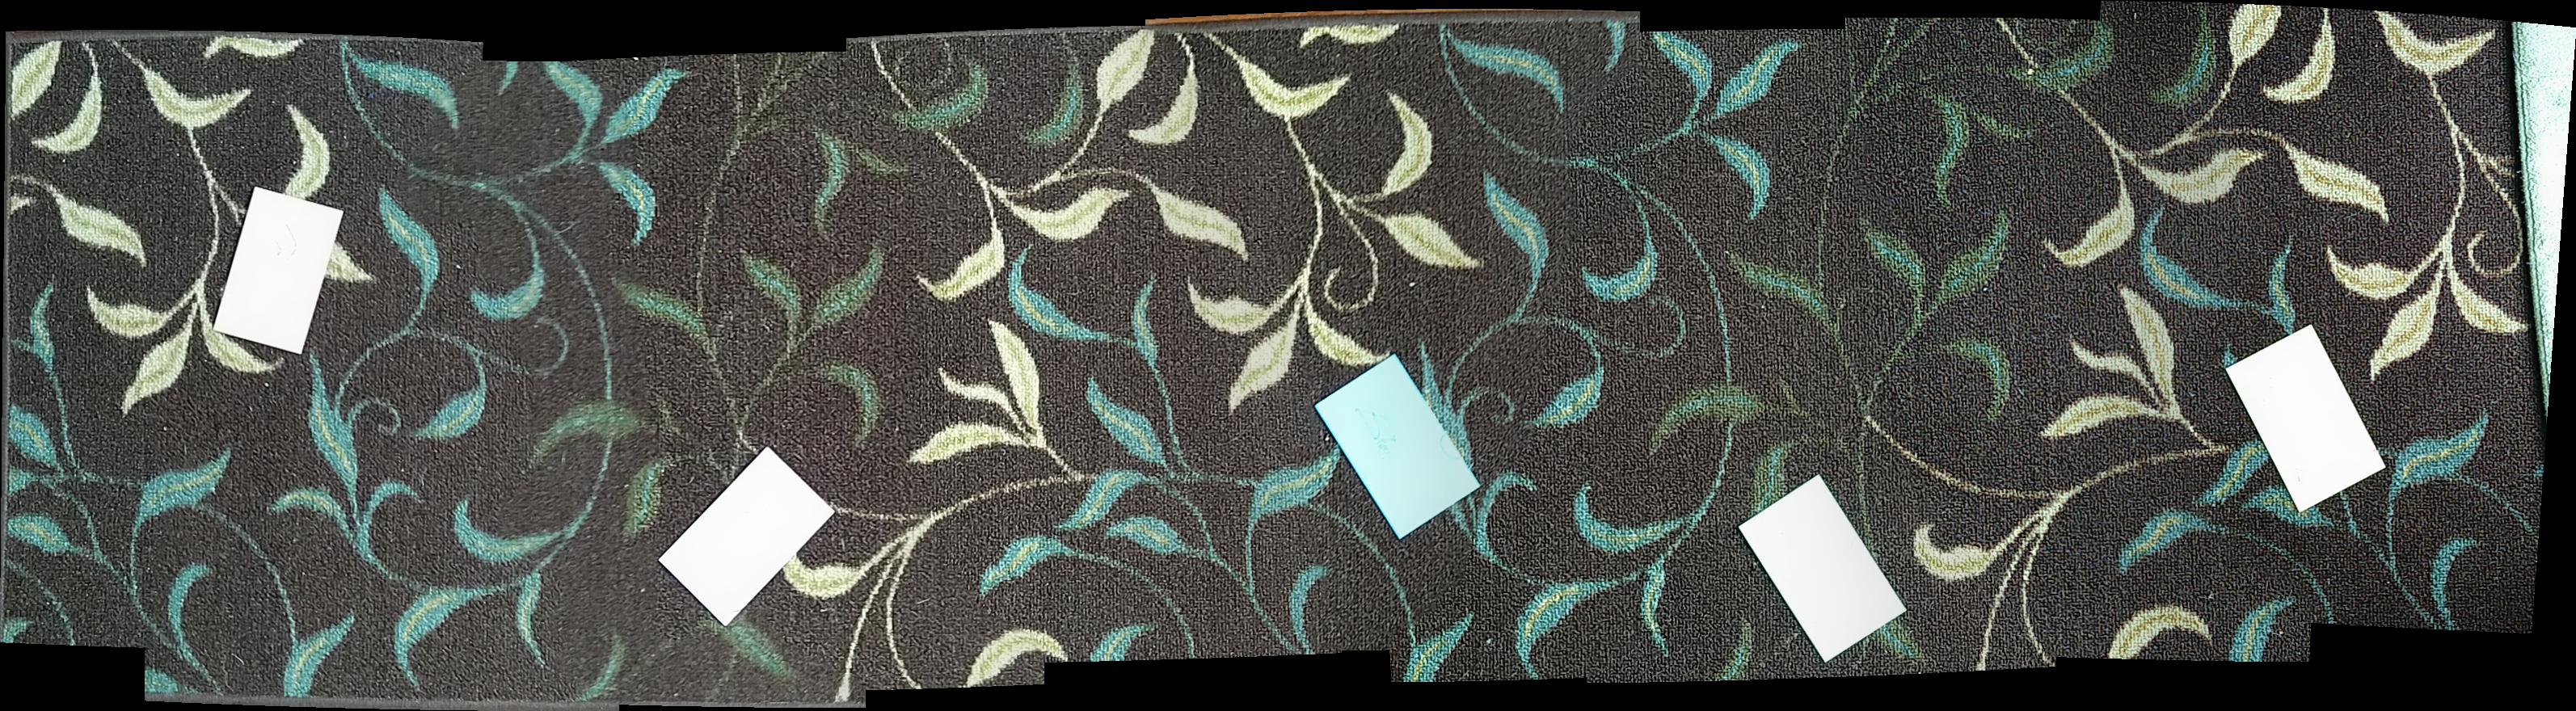 stitched rug panorama